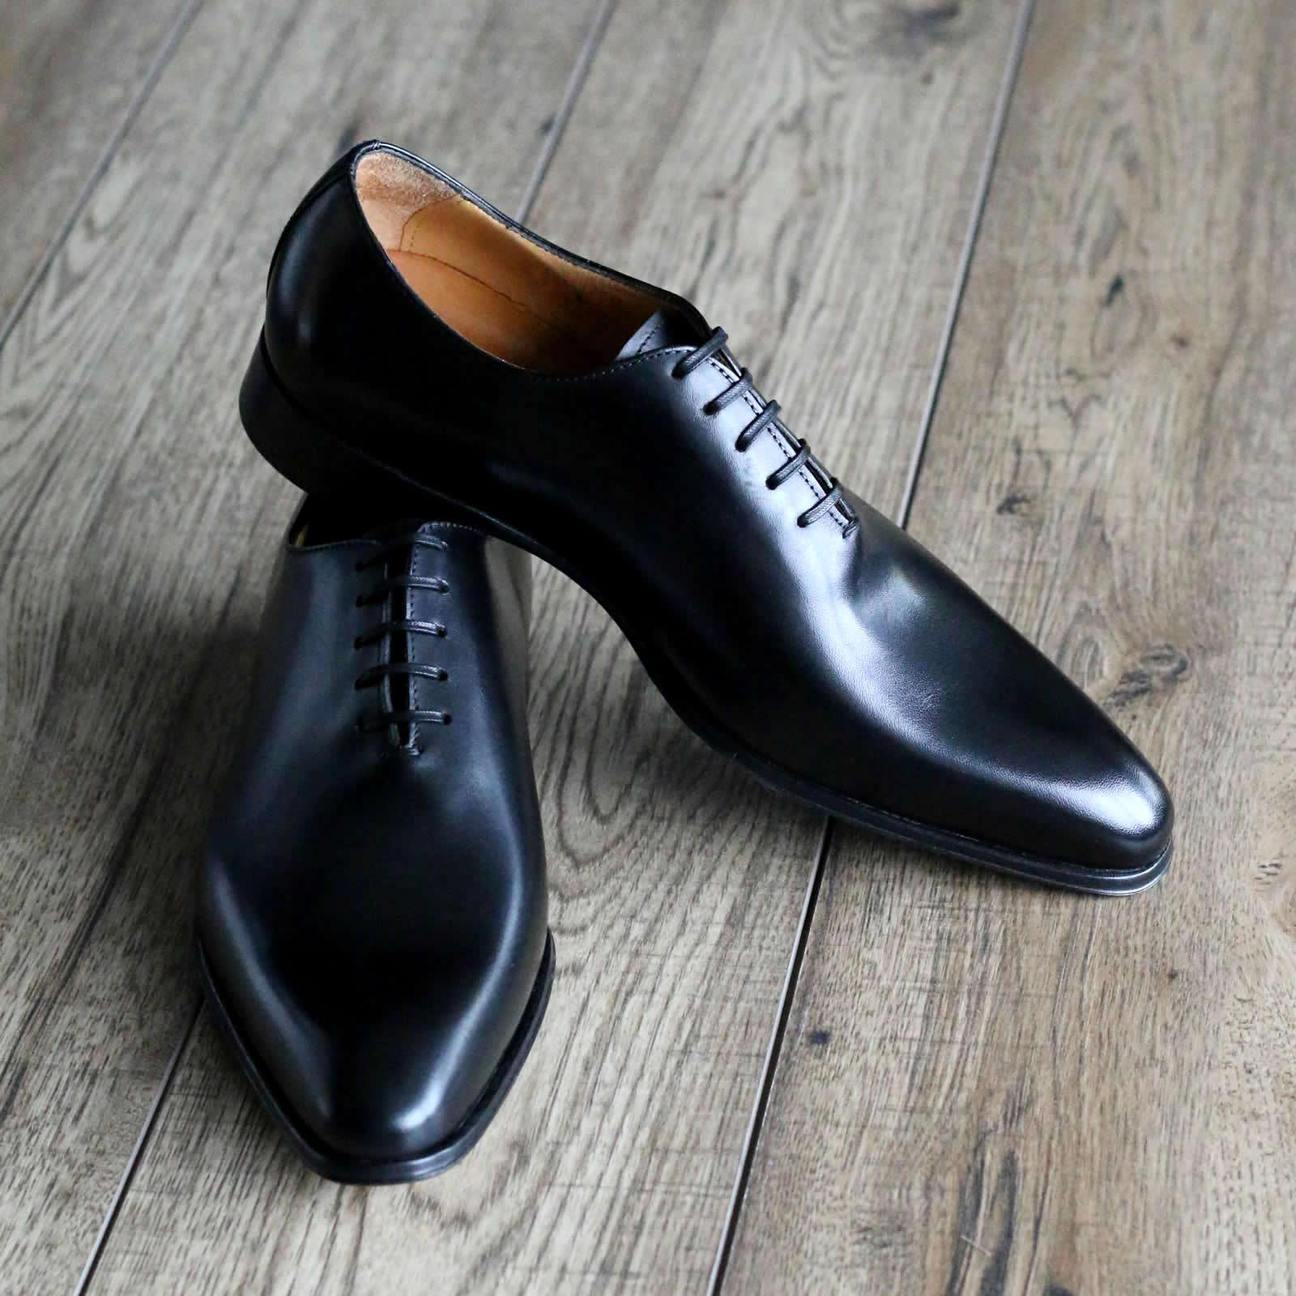 dress shoes black mens